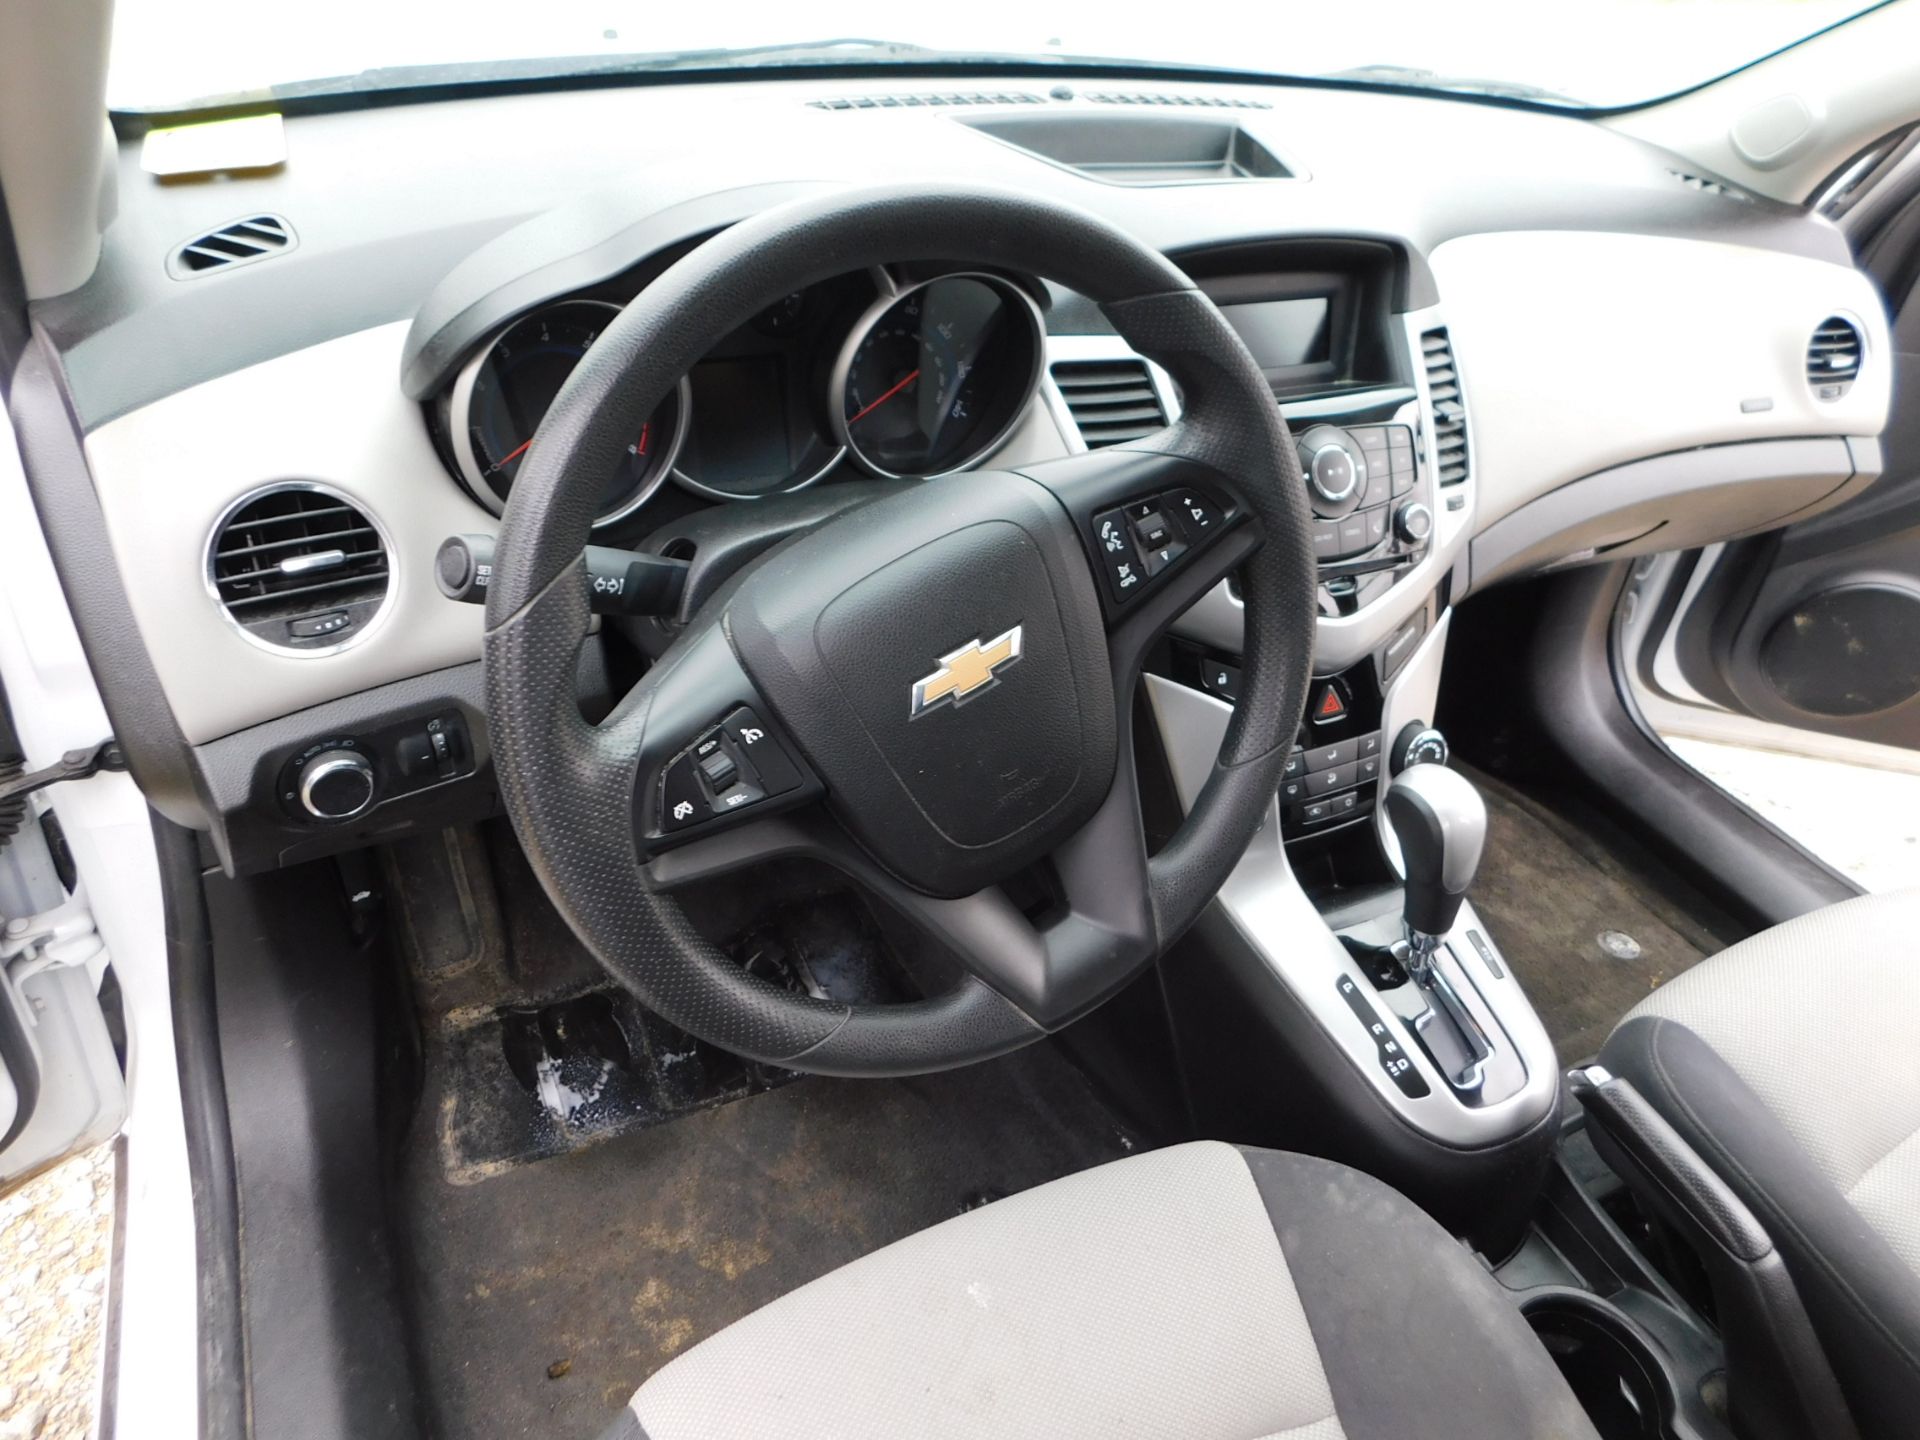 2014 Chevrolet Cruze 4-Door Sedan, VIN 1G1PA5SH1E7315697, AM/FM, AC, Cruise Control, PW, PL, 111,323 - Image 22 of 41